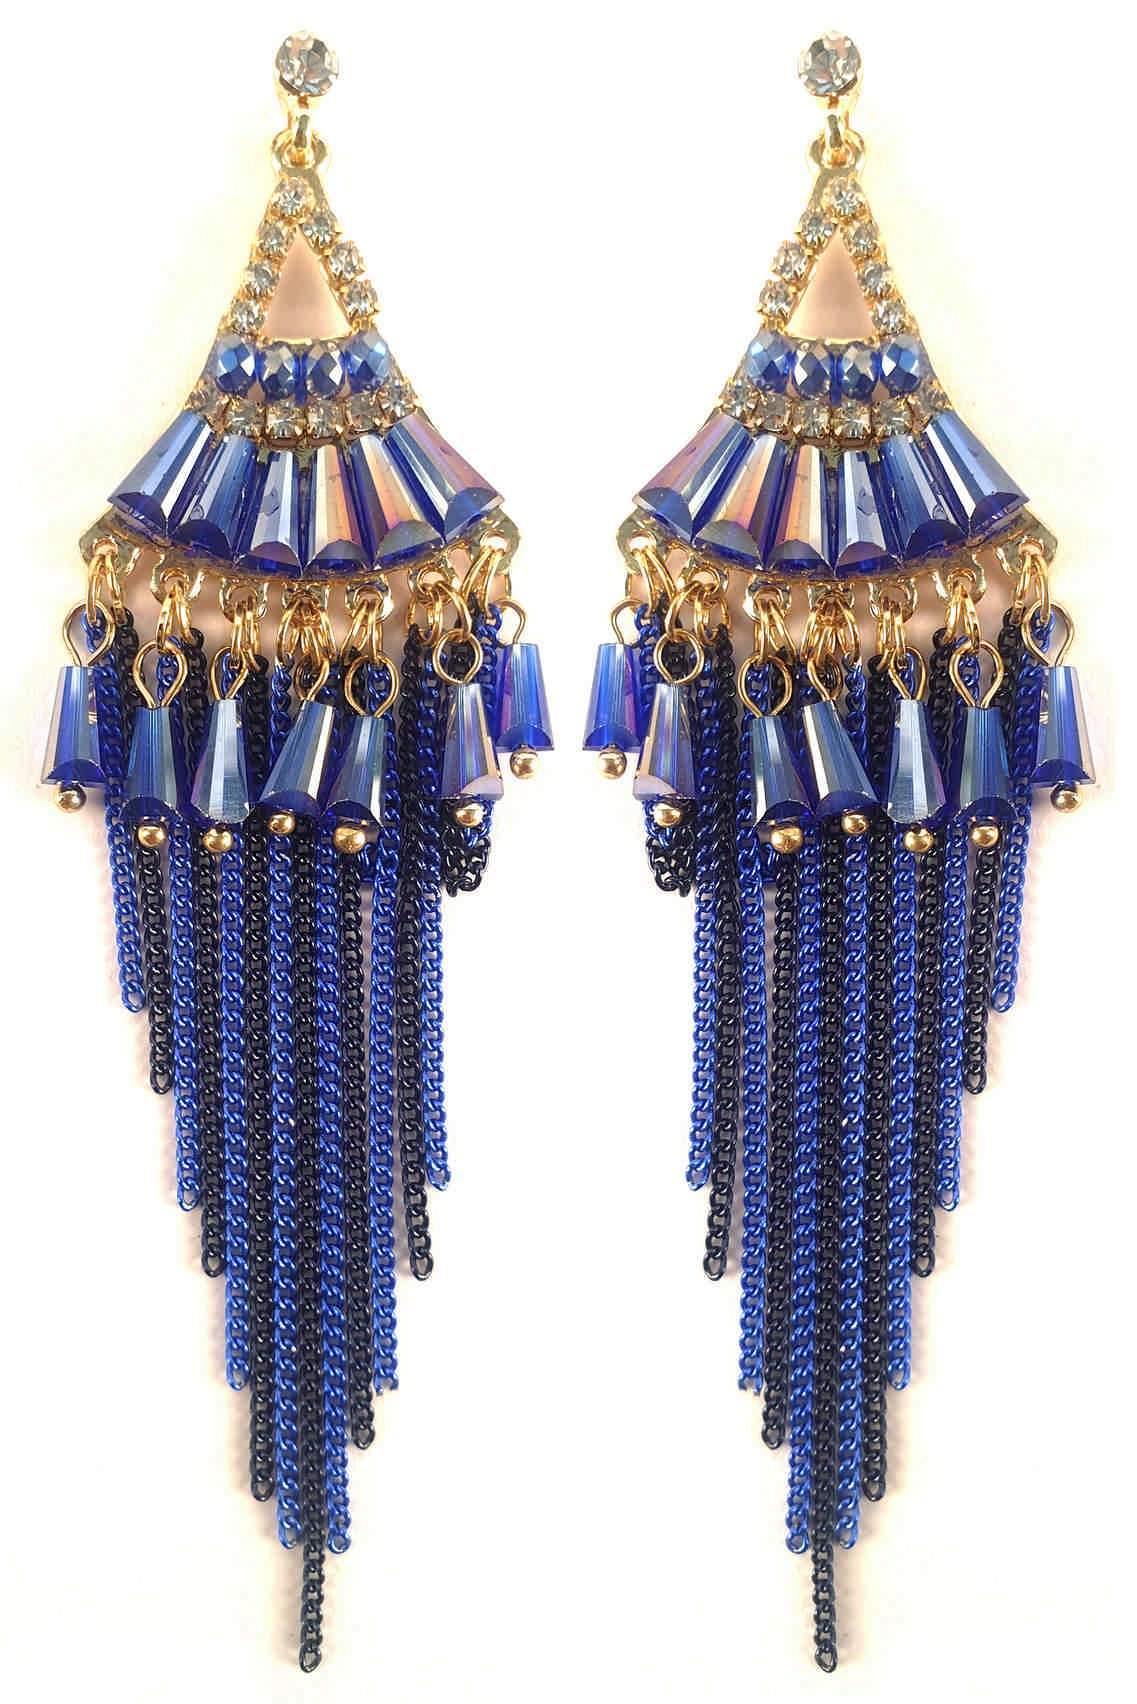 Indian Petals Chandelier Design Artificial Fashion Dangler Earrings Jhumka with Tassales for Girls Women, Blue